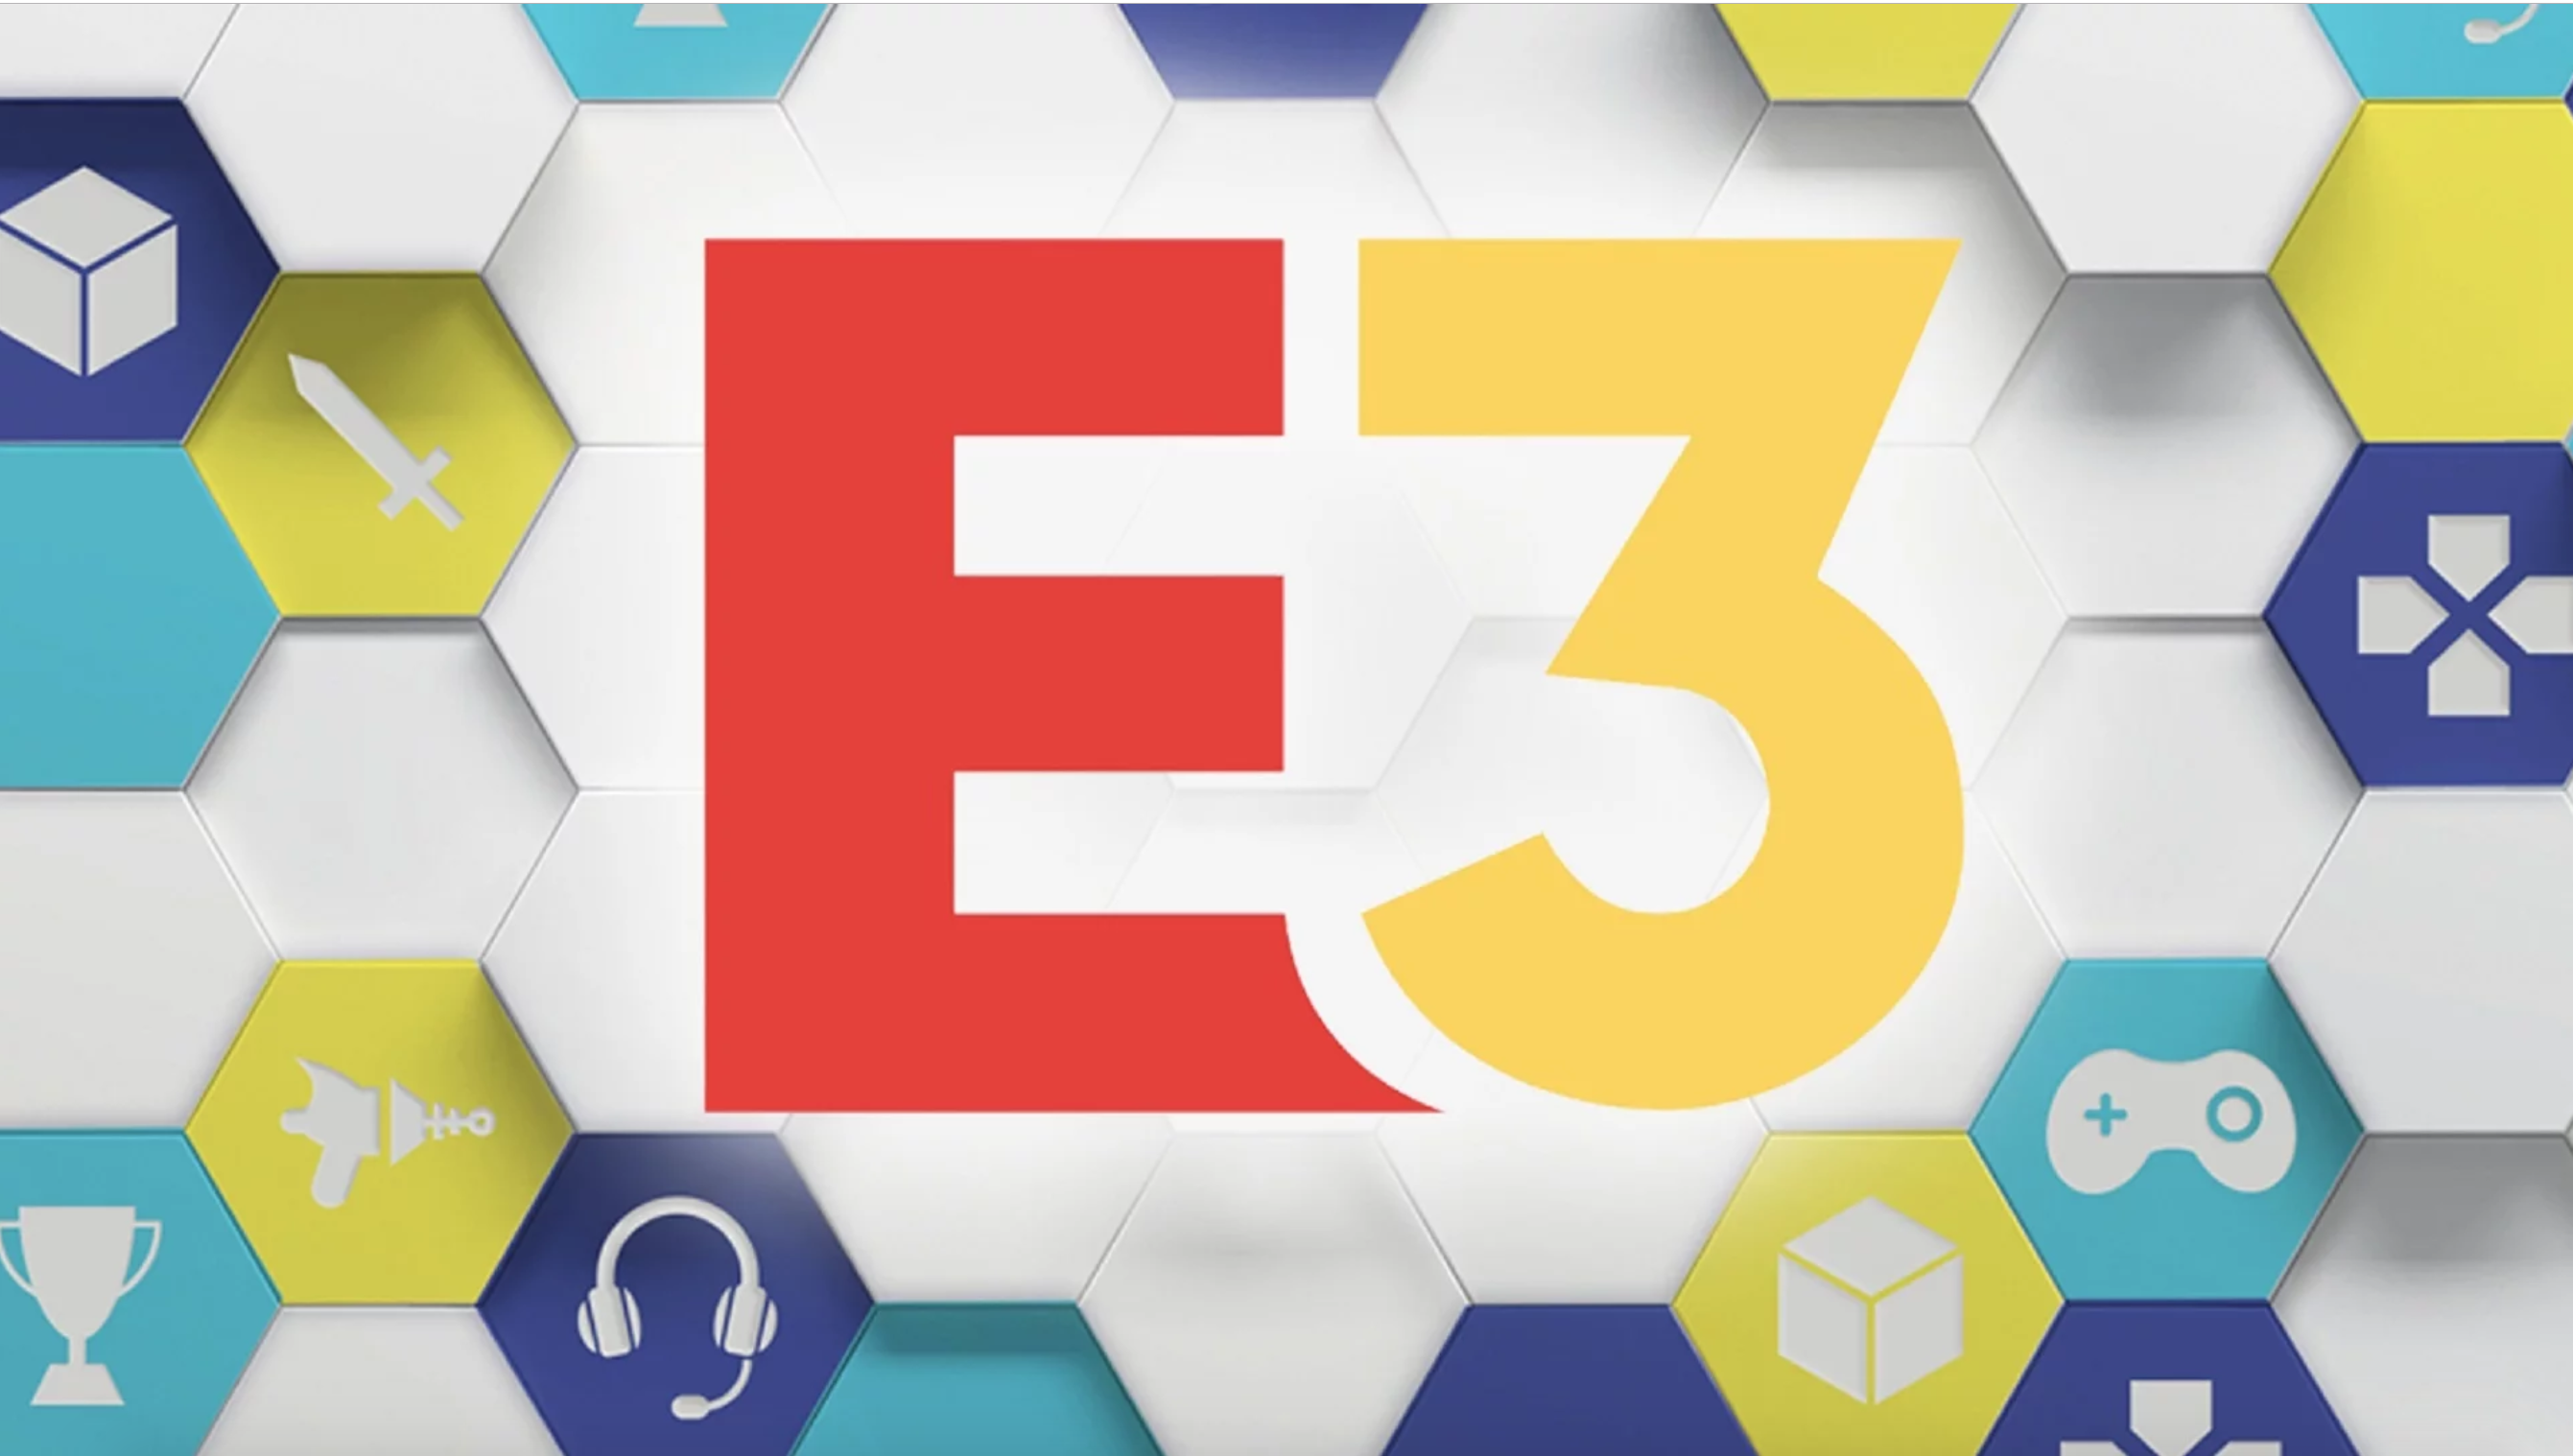 PlayStation จะไม่เข้าร่วมงาน E3 2020 เป็นปีที่สอง แต่จะเข้าร่วมงานเล็กๆ งานอื่นแทน